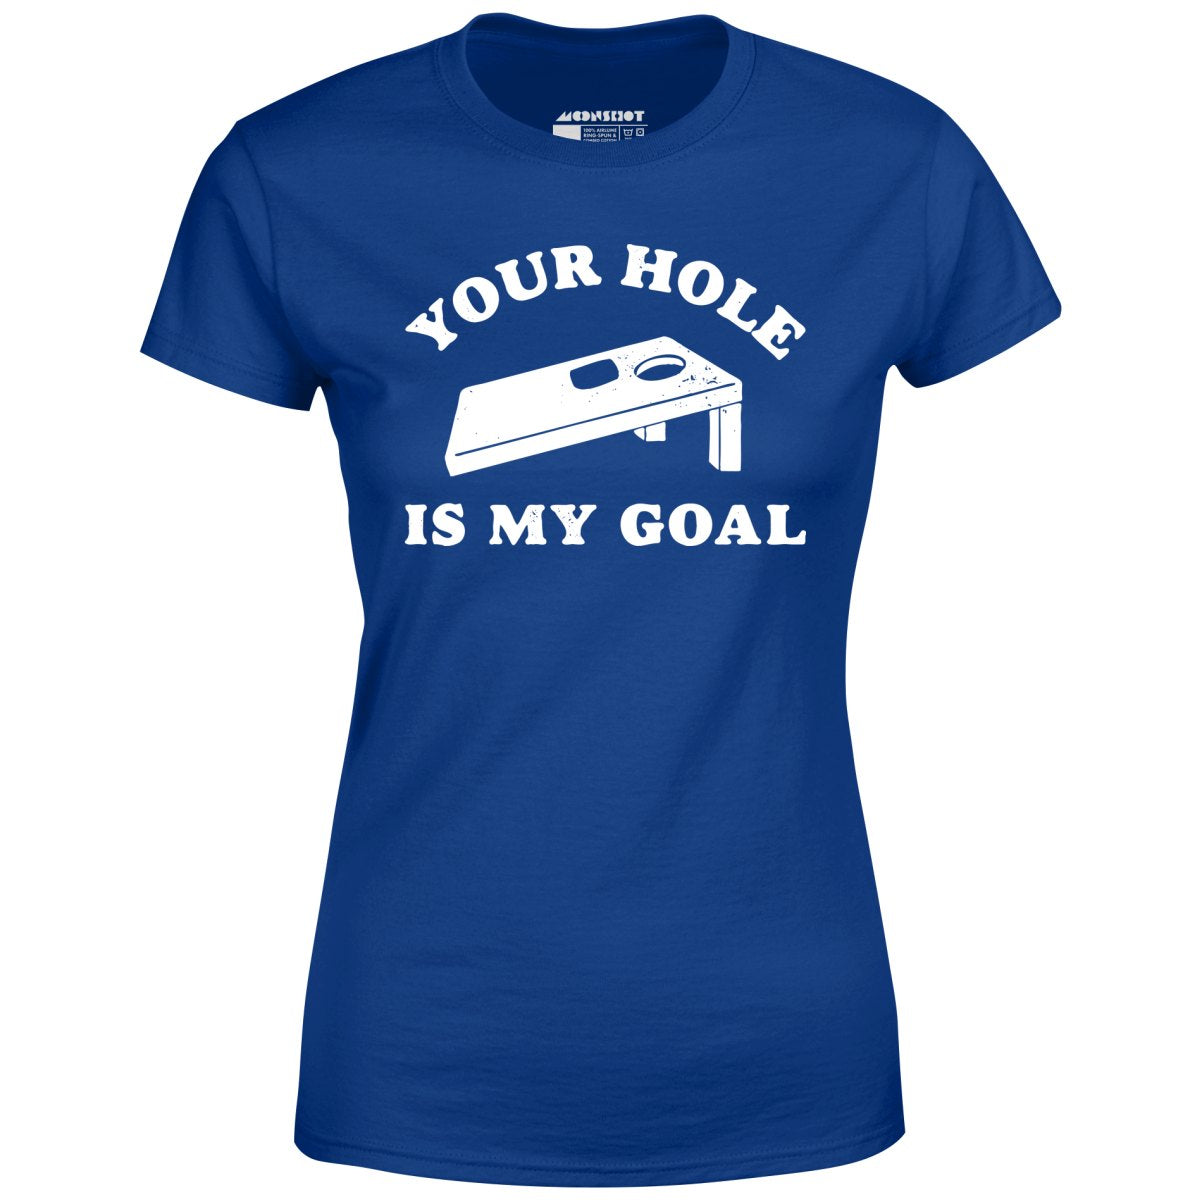 Your Hole is My Goal - Cornhole - Women's T-Shirt